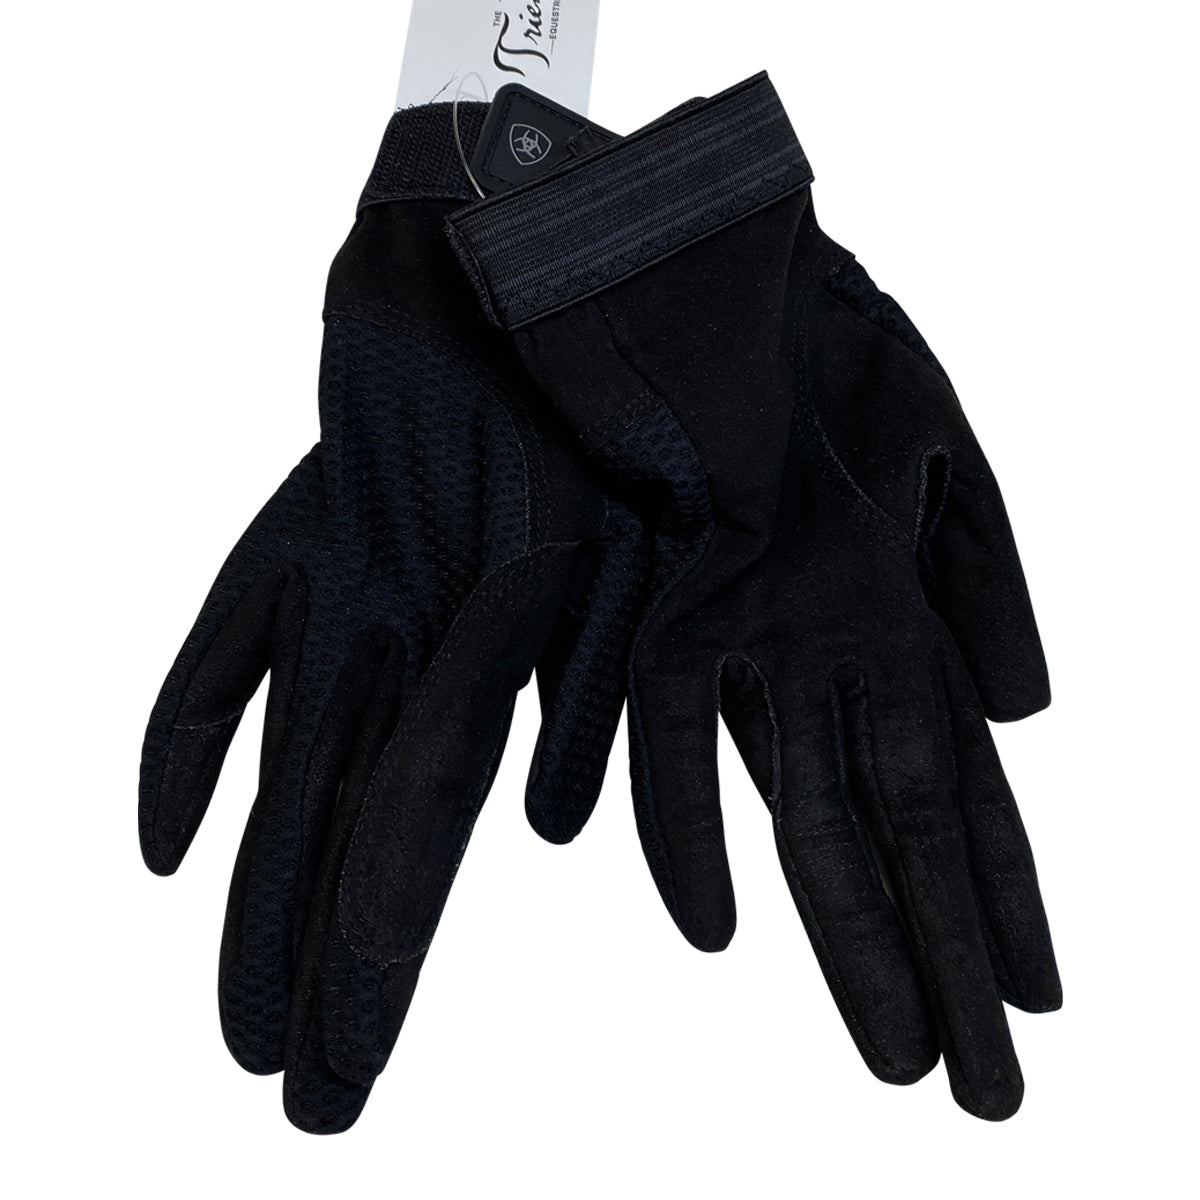 Ariat TEK Grip Gloves in Black